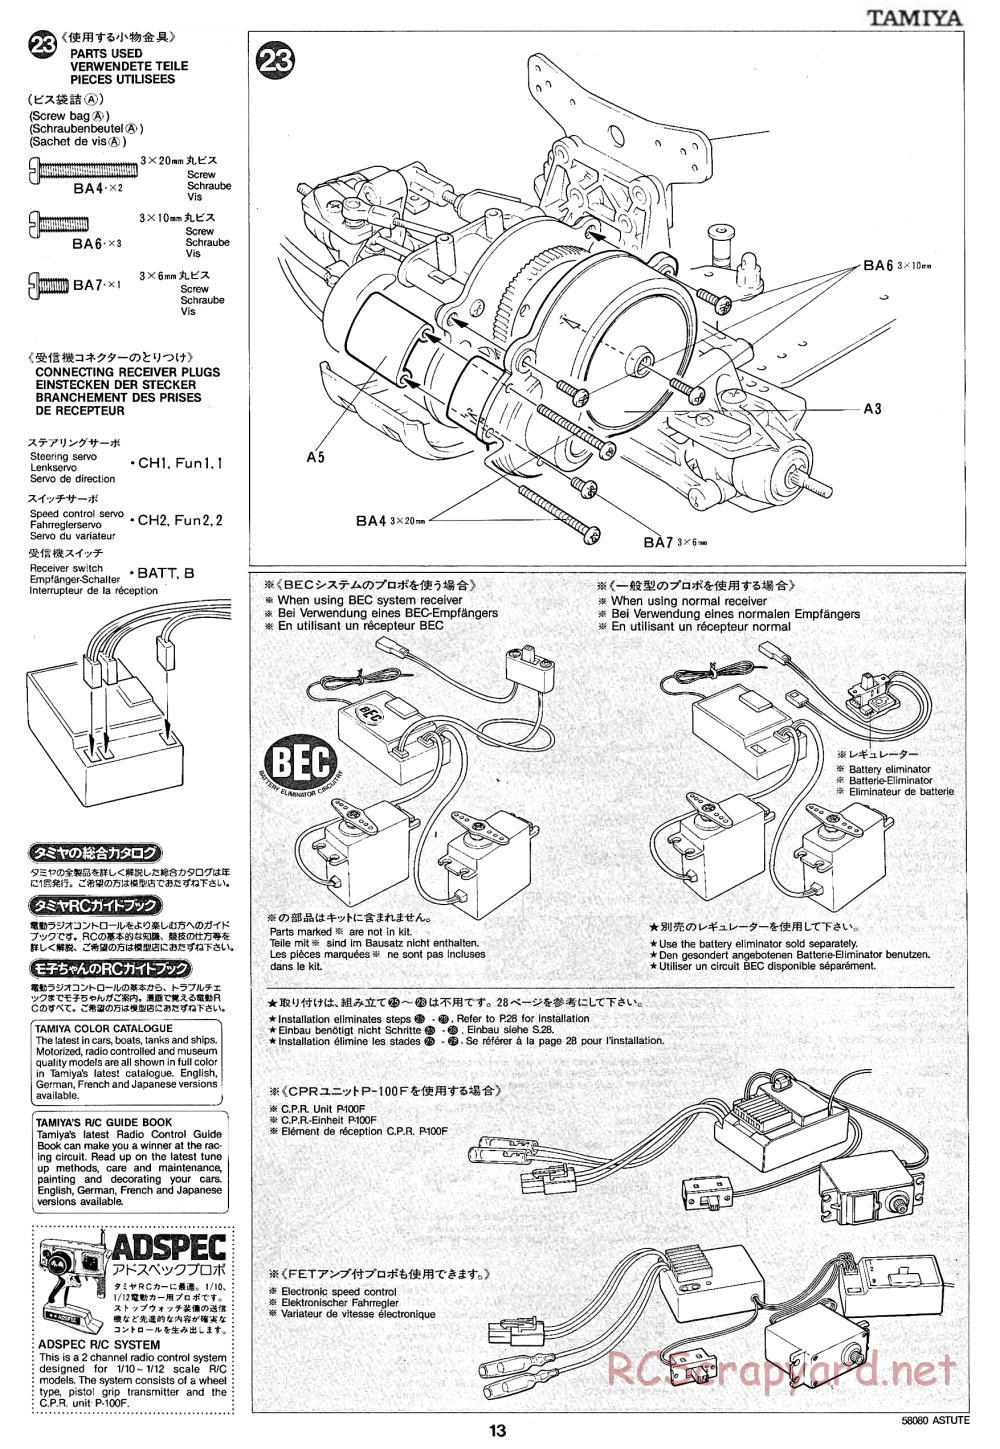 Tamiya - Astute - 58080 - Manual - Page 13